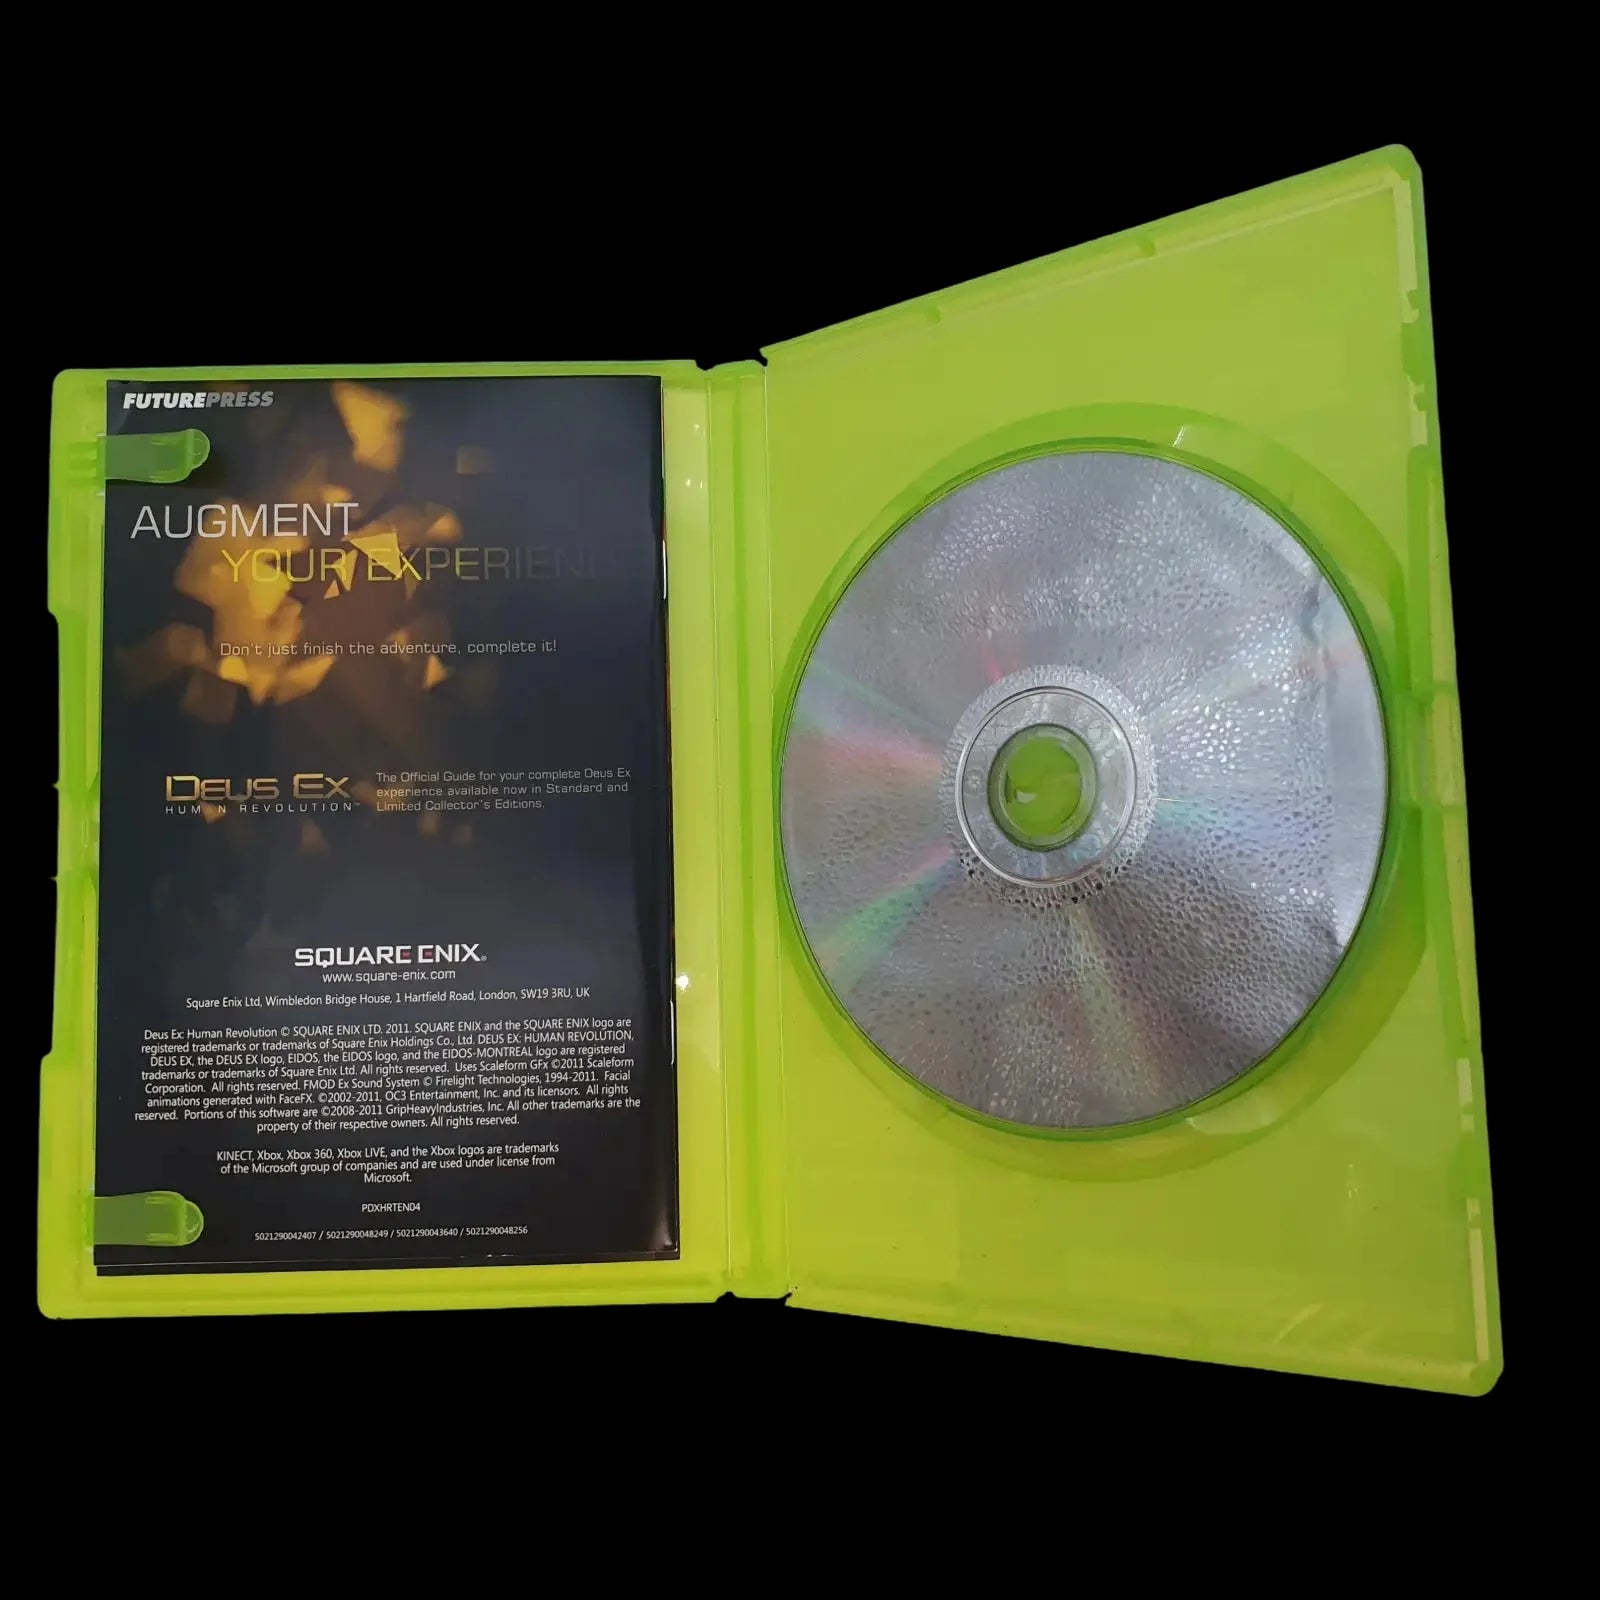 Deus Ex Human Revolution Limited Edition Microsoft Xbox 360